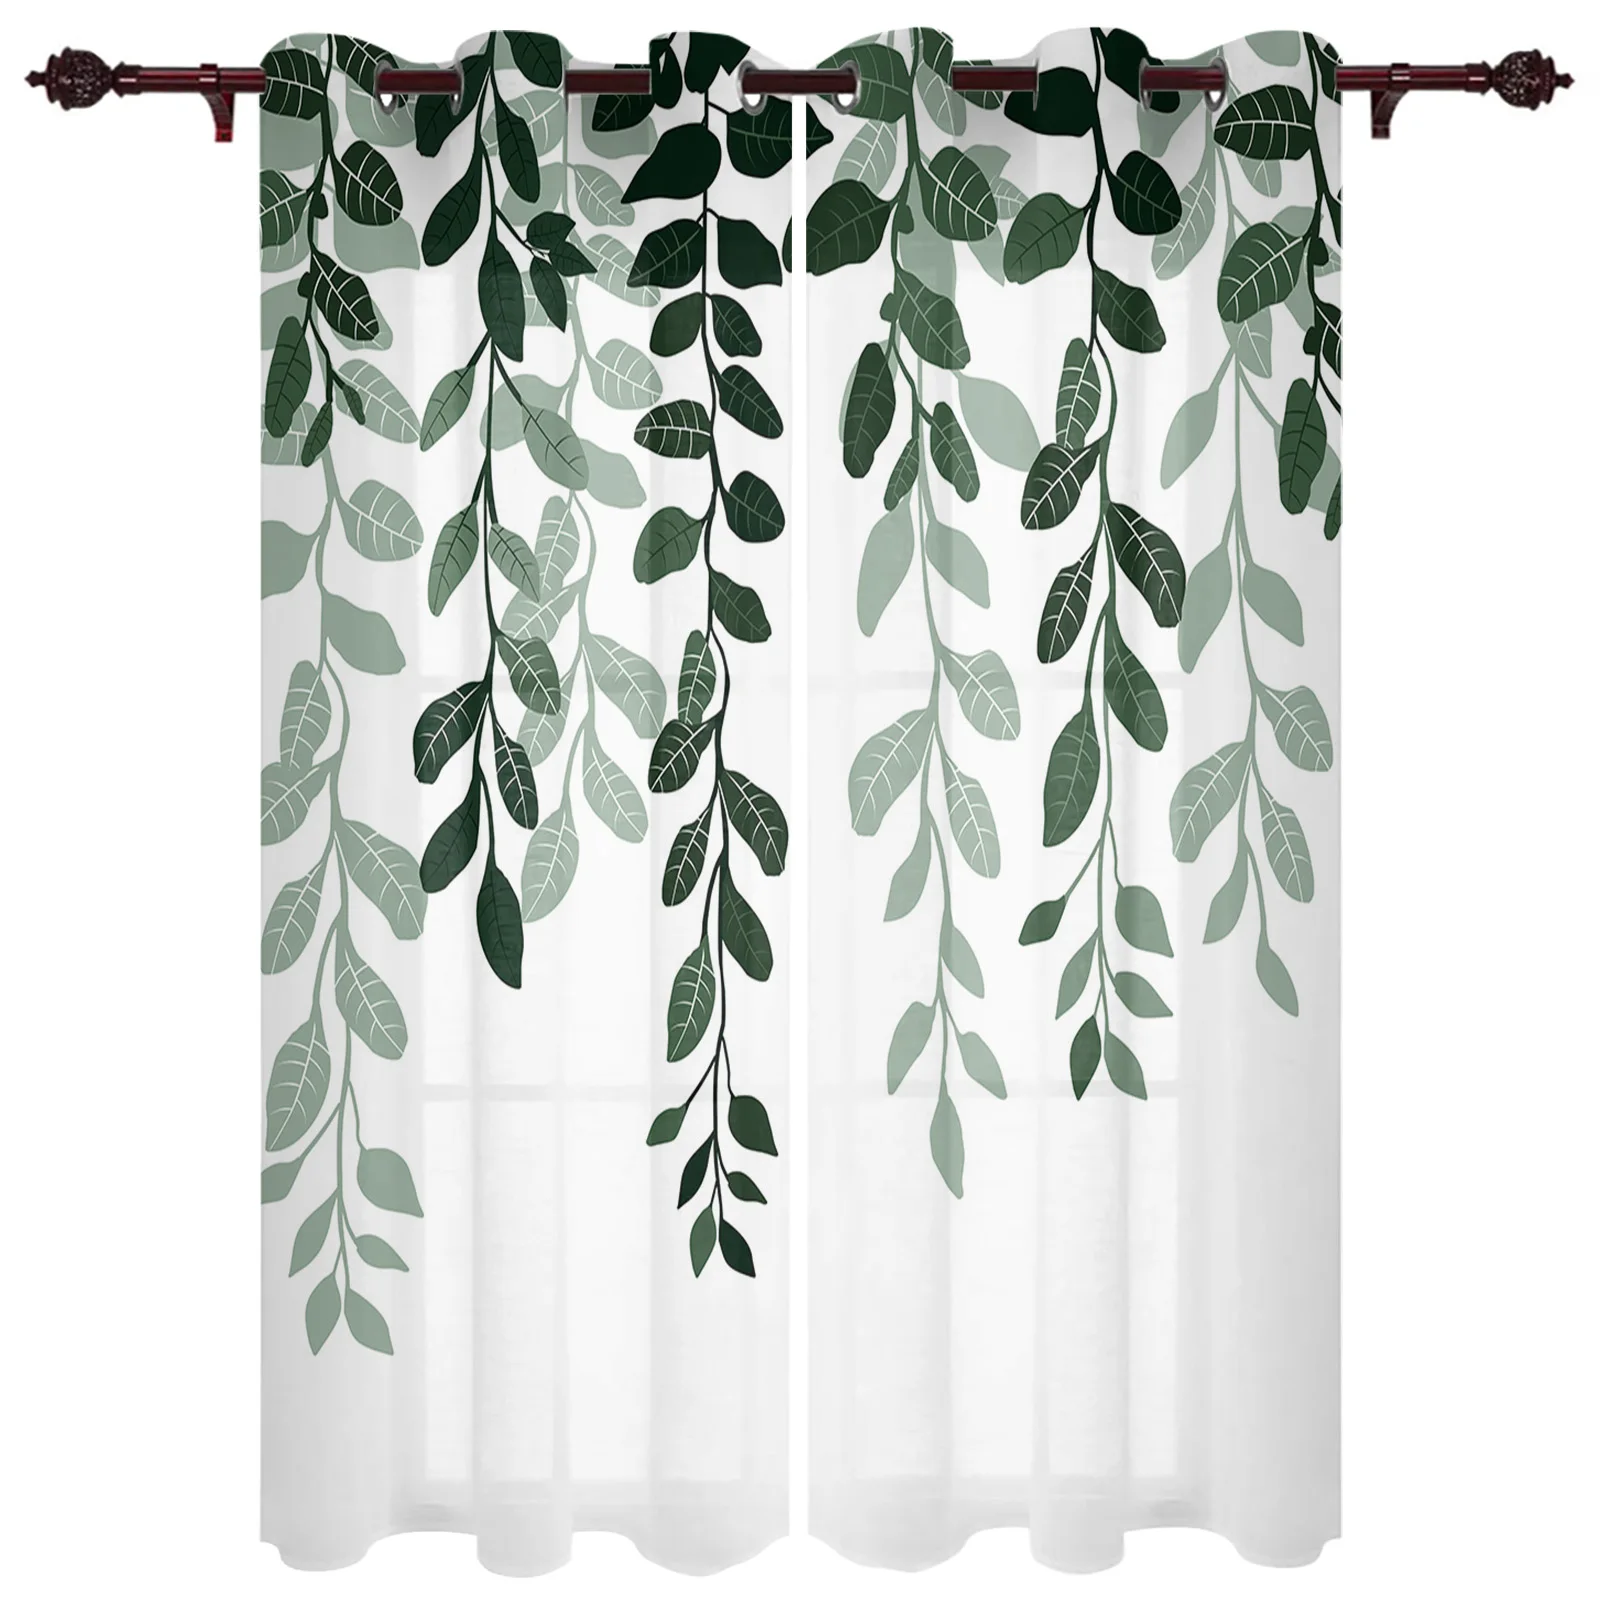 

Leaf Plants, Rural Green Window Curtains Living Room Bedroom Screens Modern Luxury Home Decor Valance Drapes